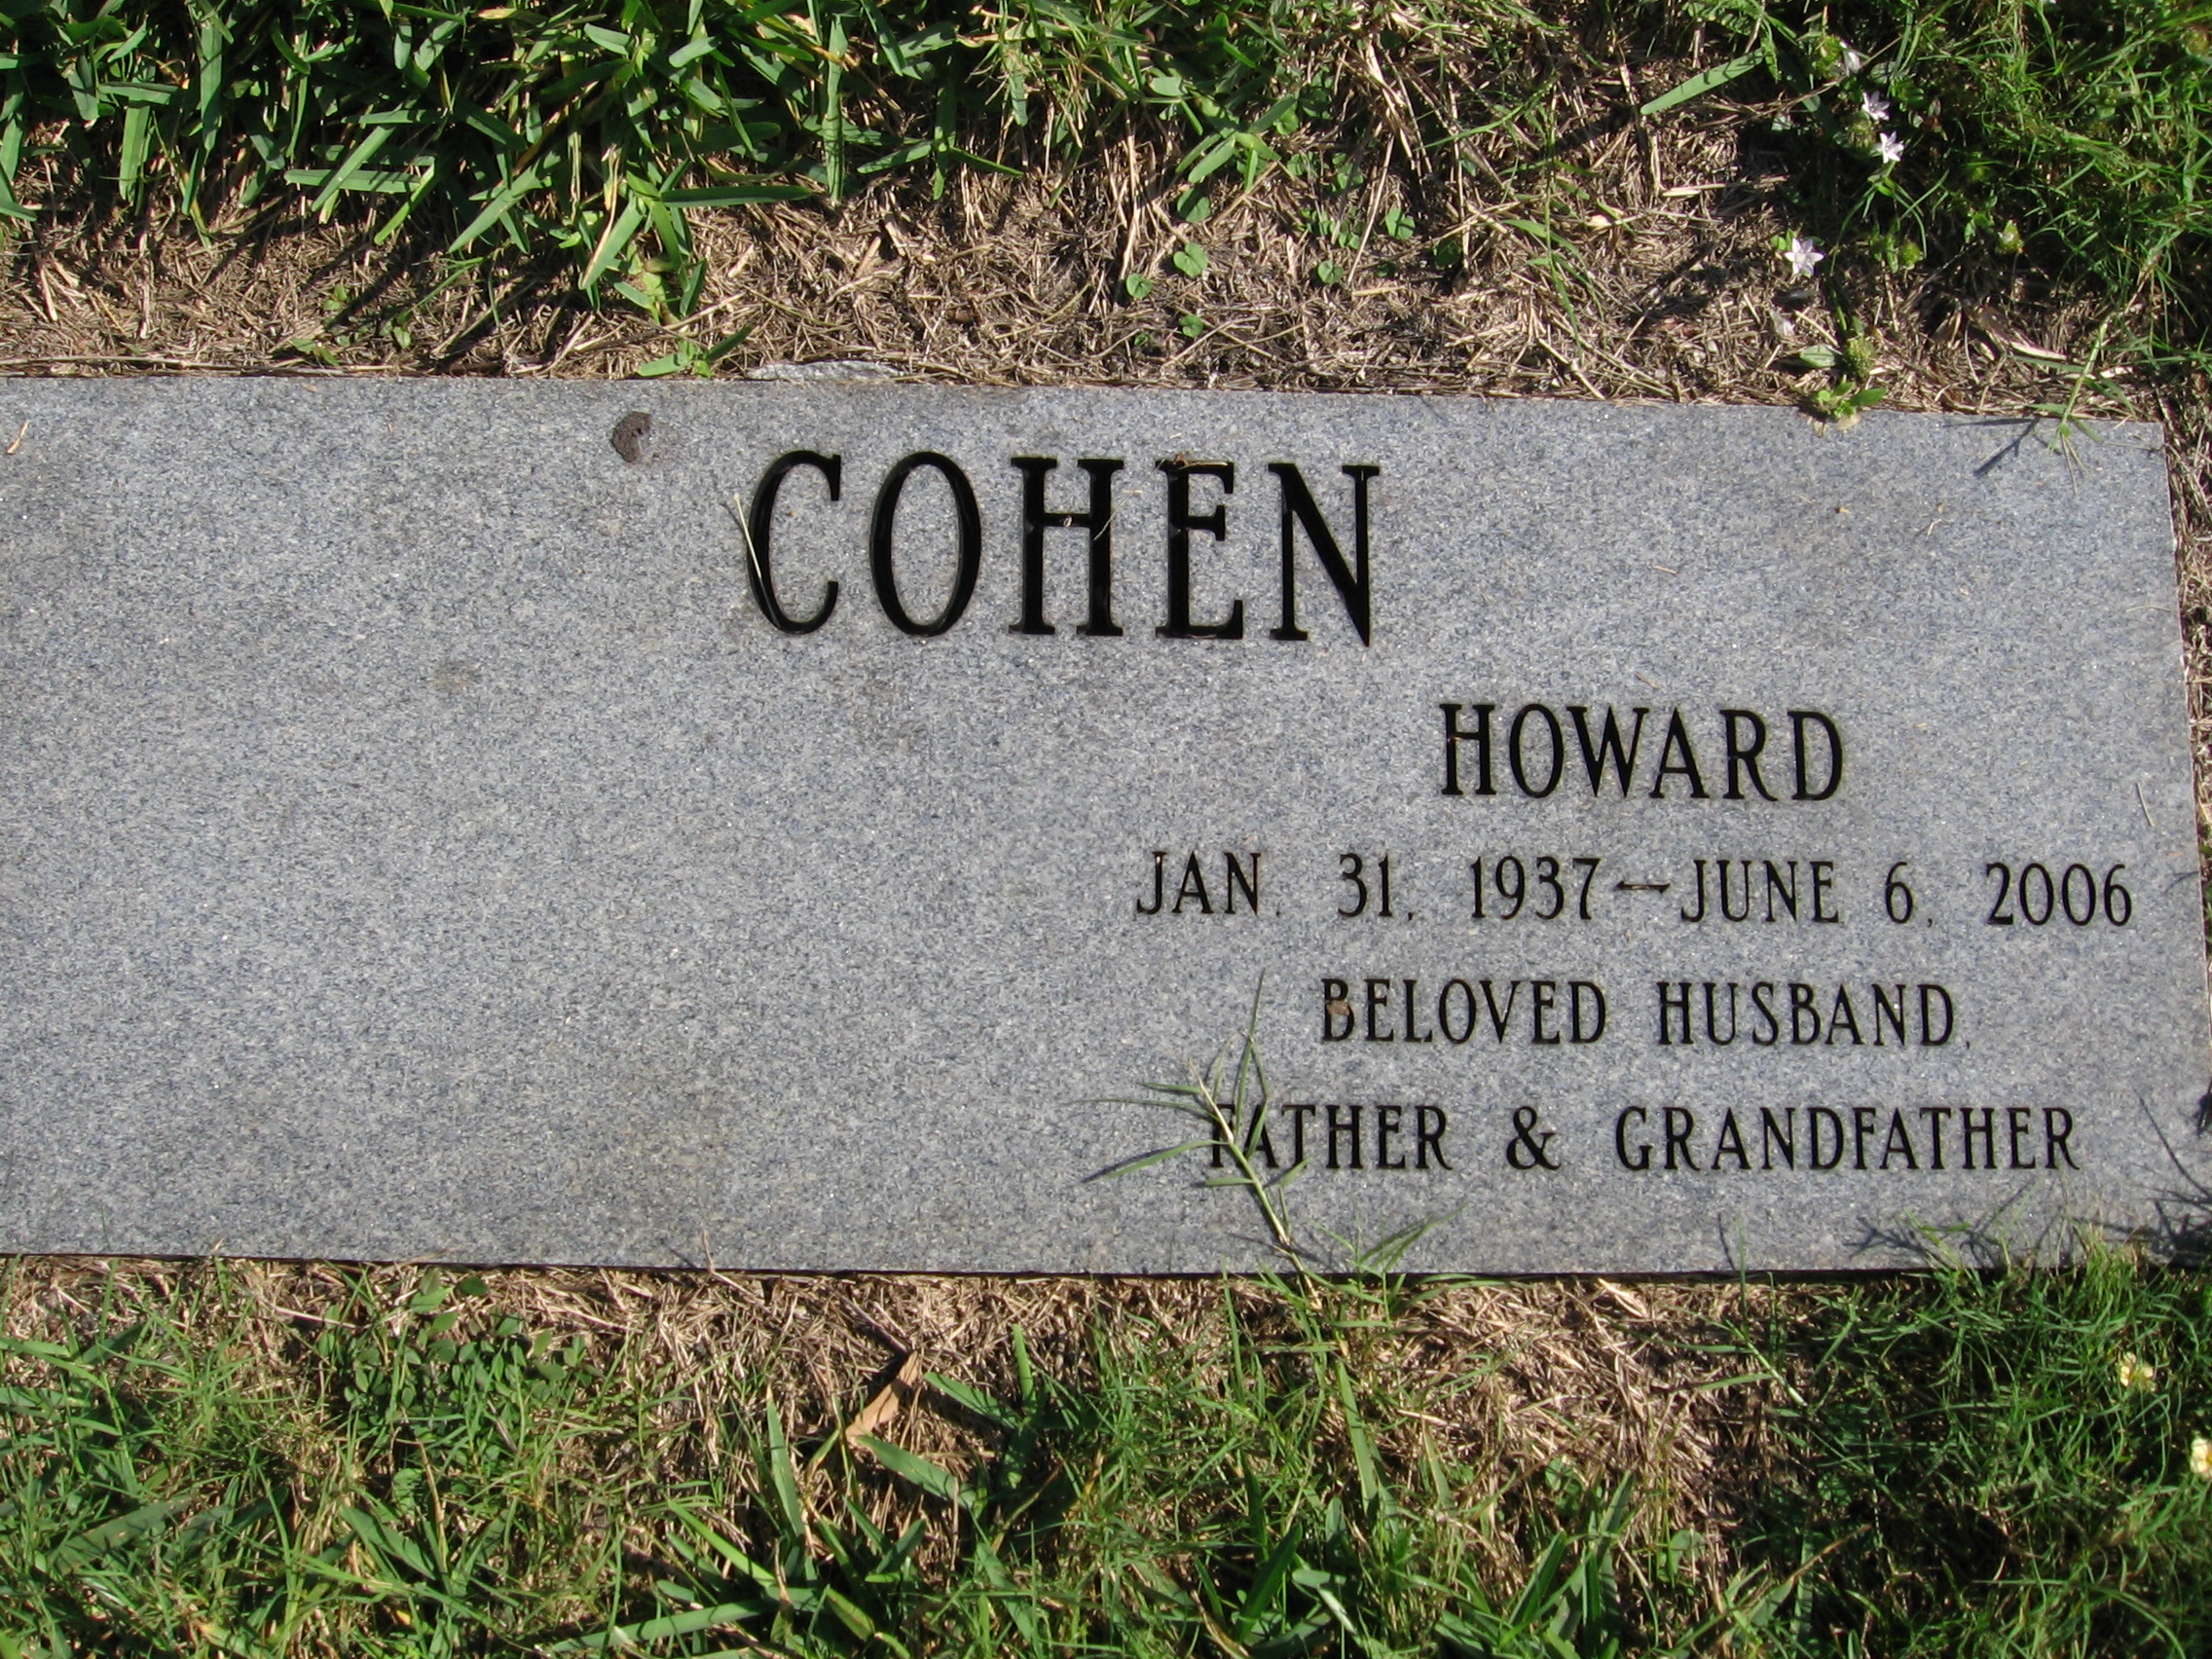 Howard Cohen